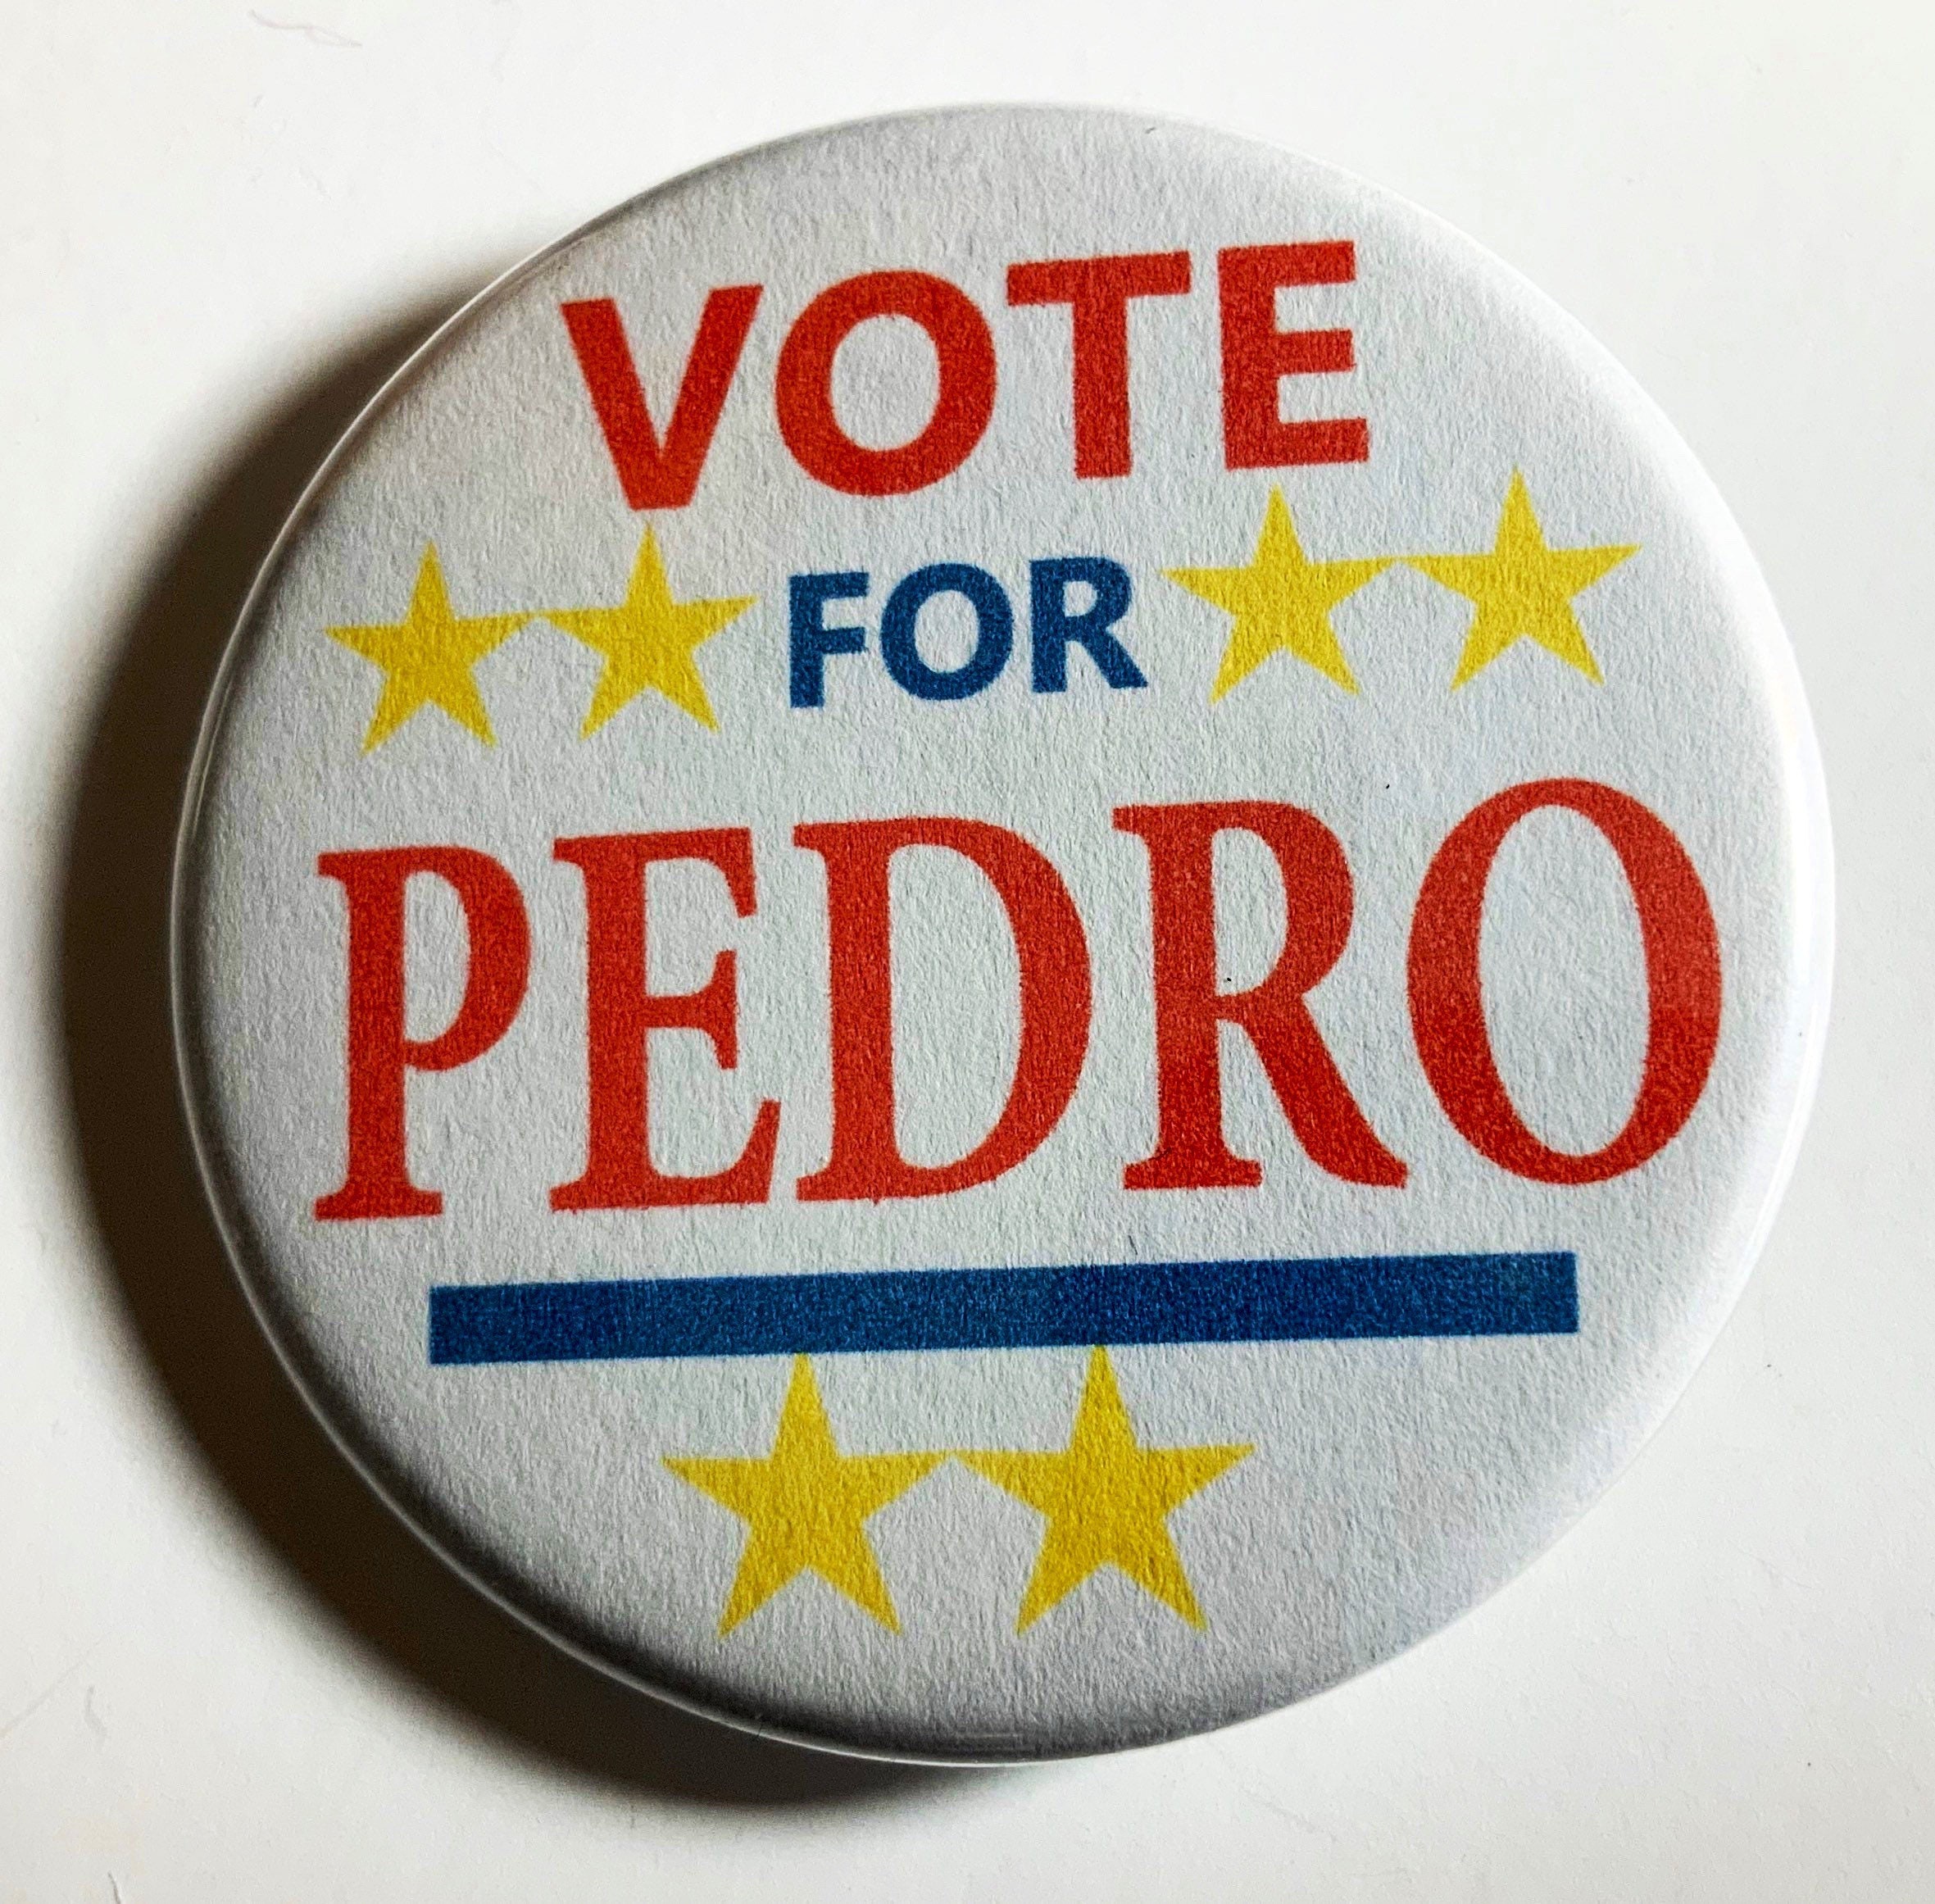 Vote For Pedro Stickers, Magnet